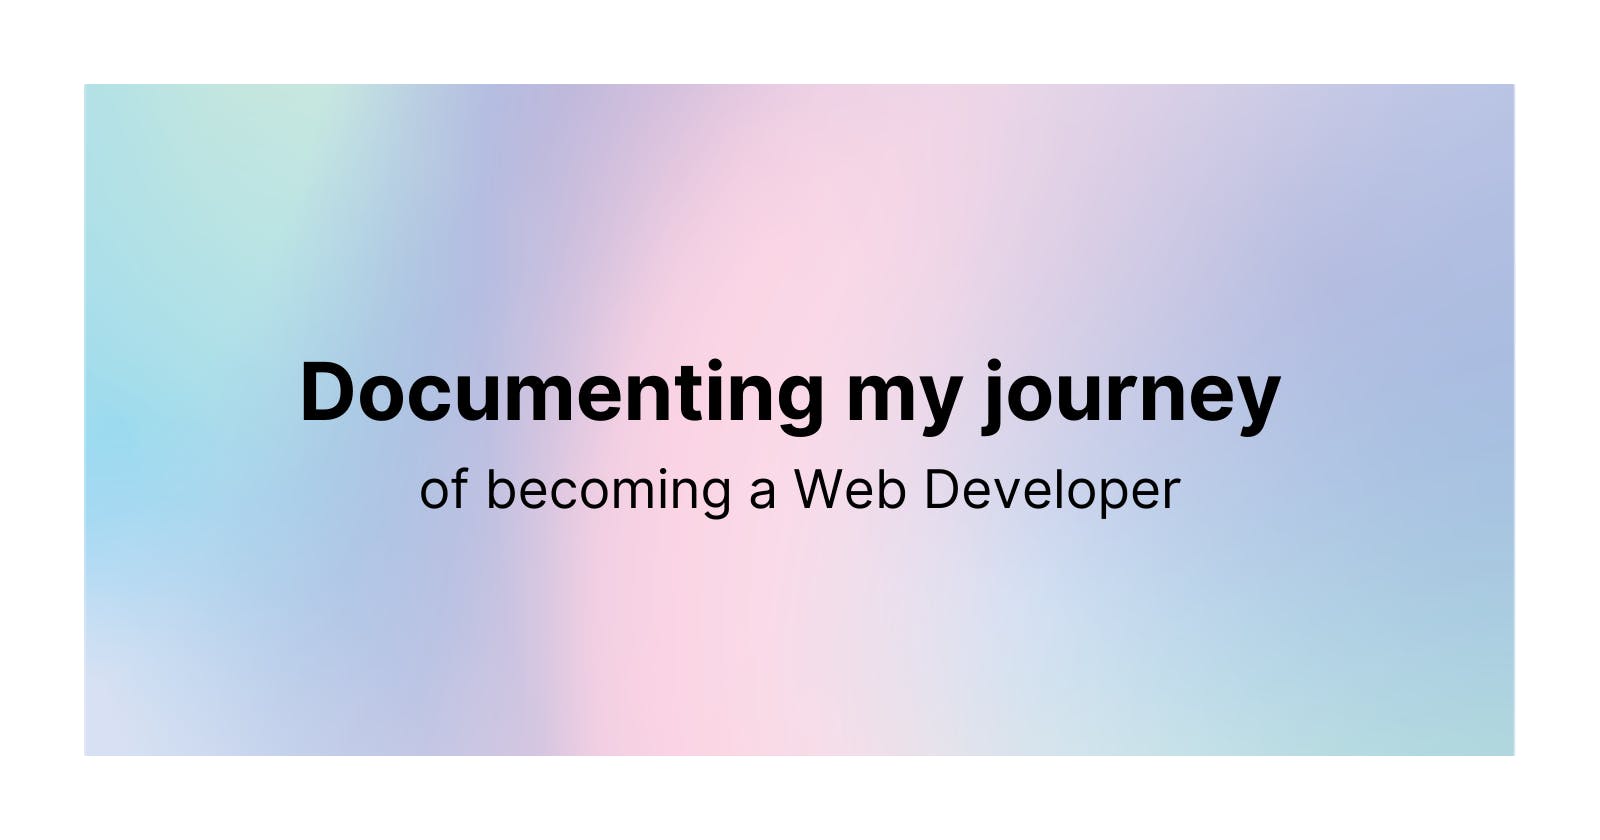 Day 4 of My Web Development Journey.